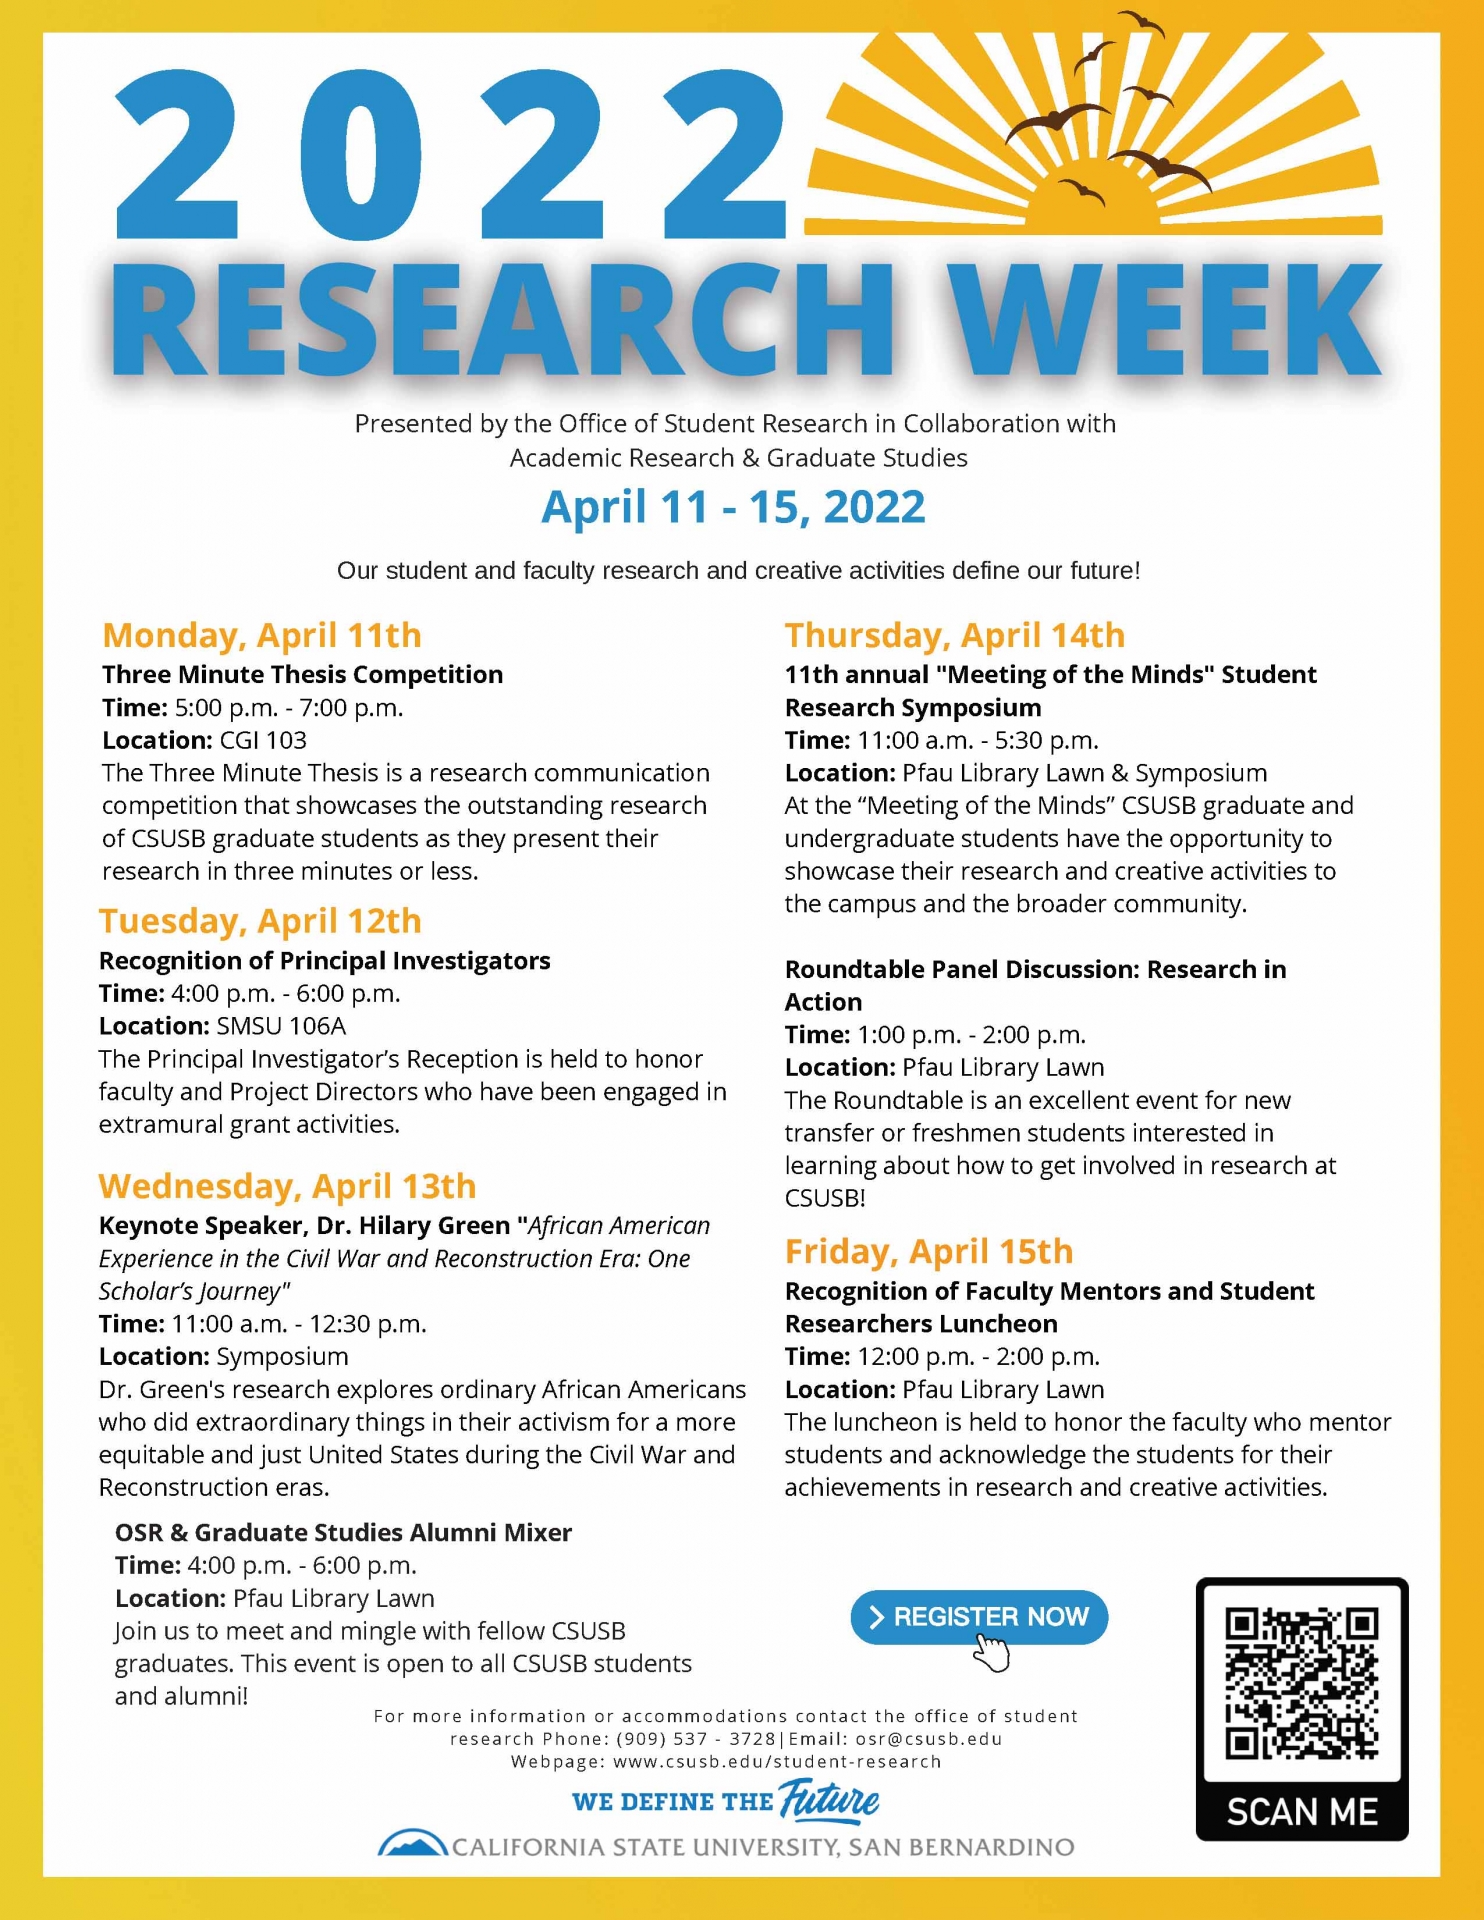 Research Week schedule flier